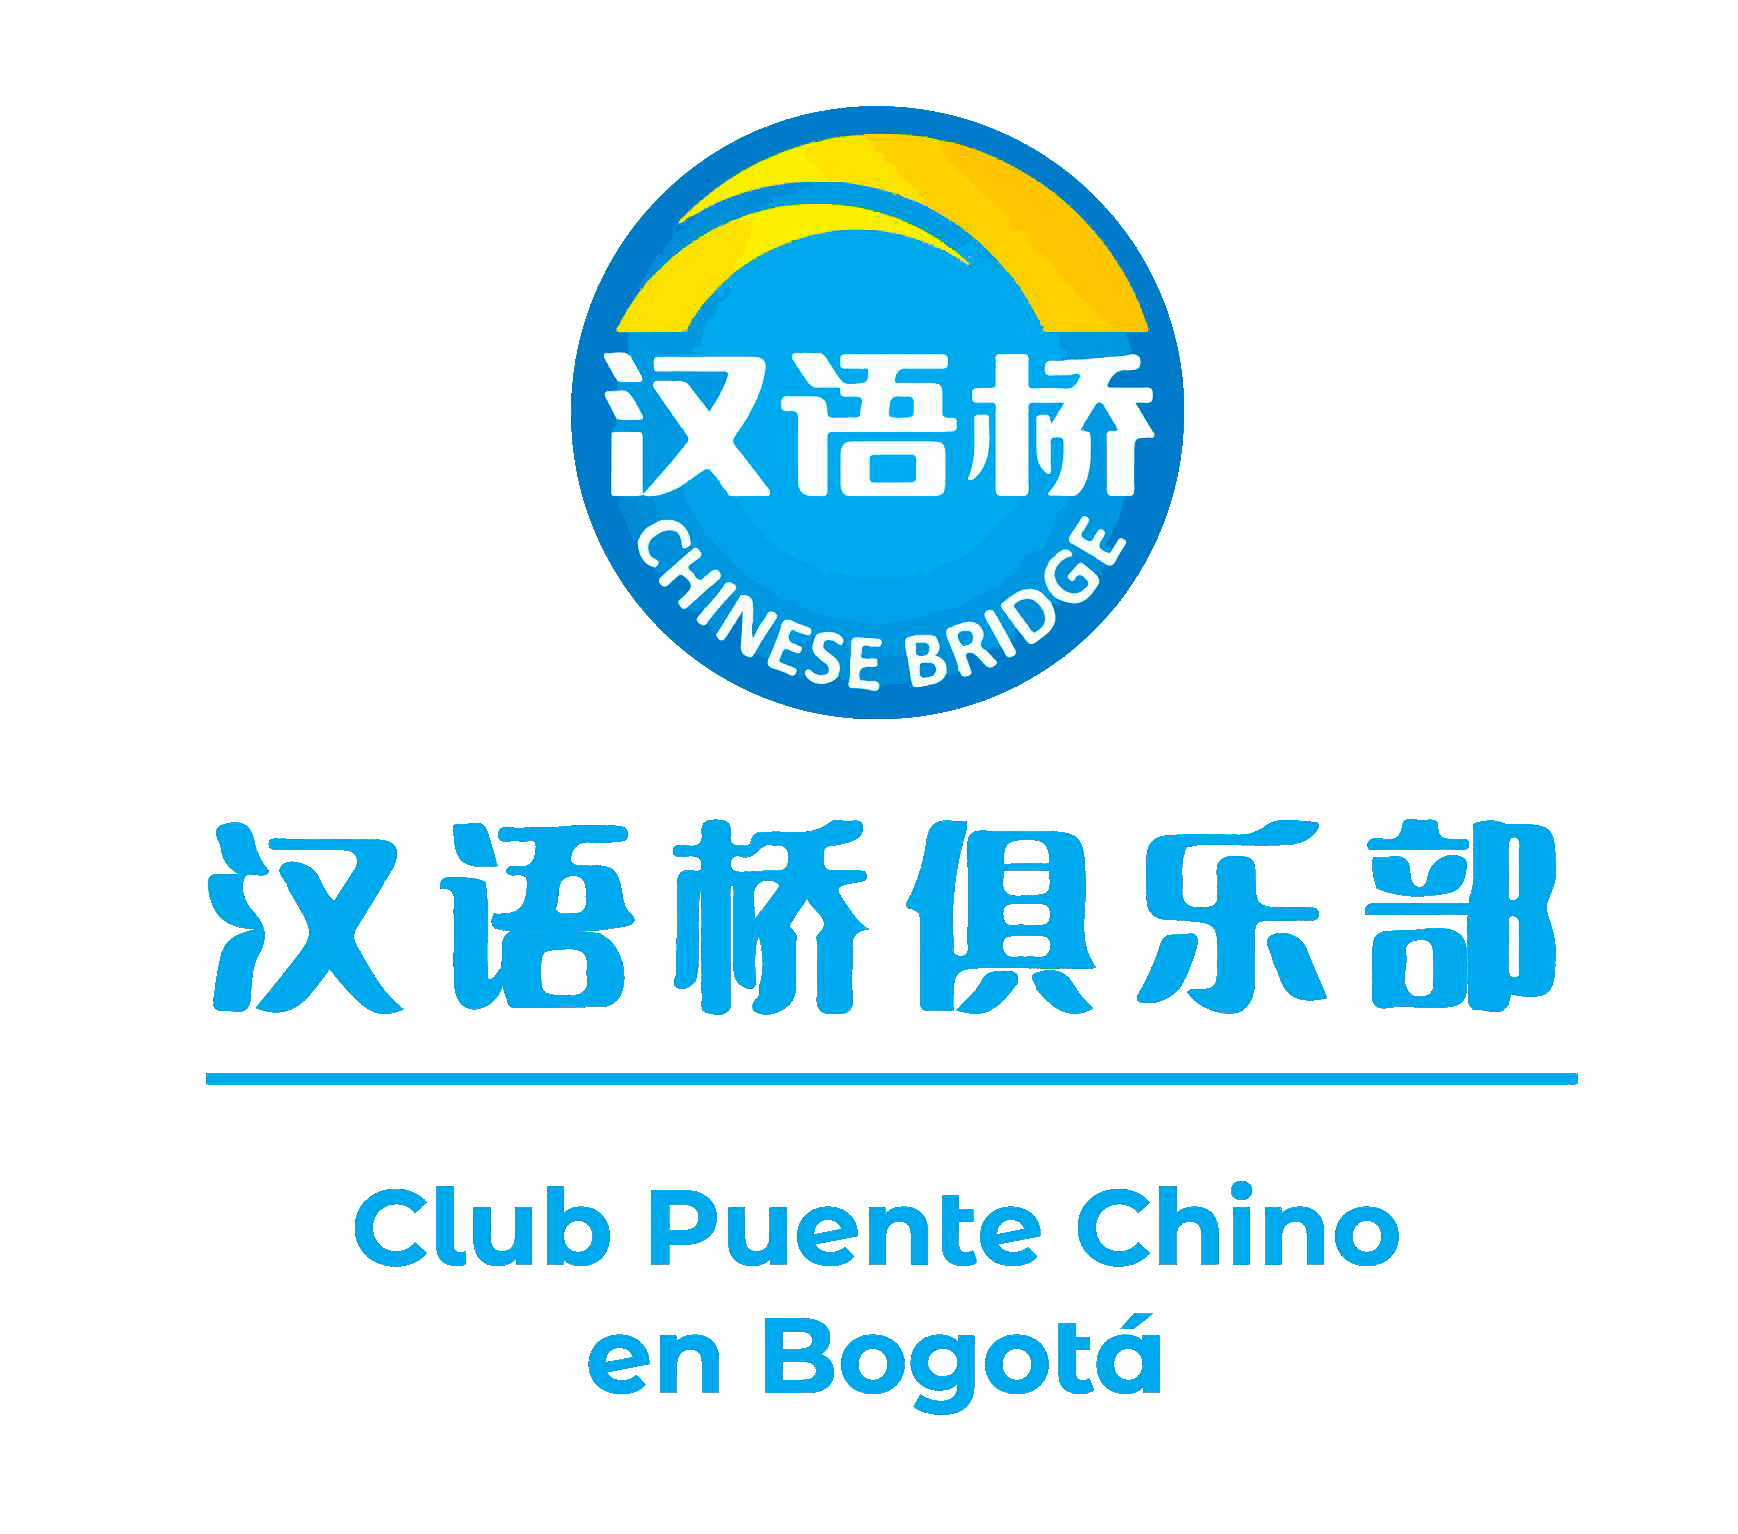 Club Puente Chino Bogotá